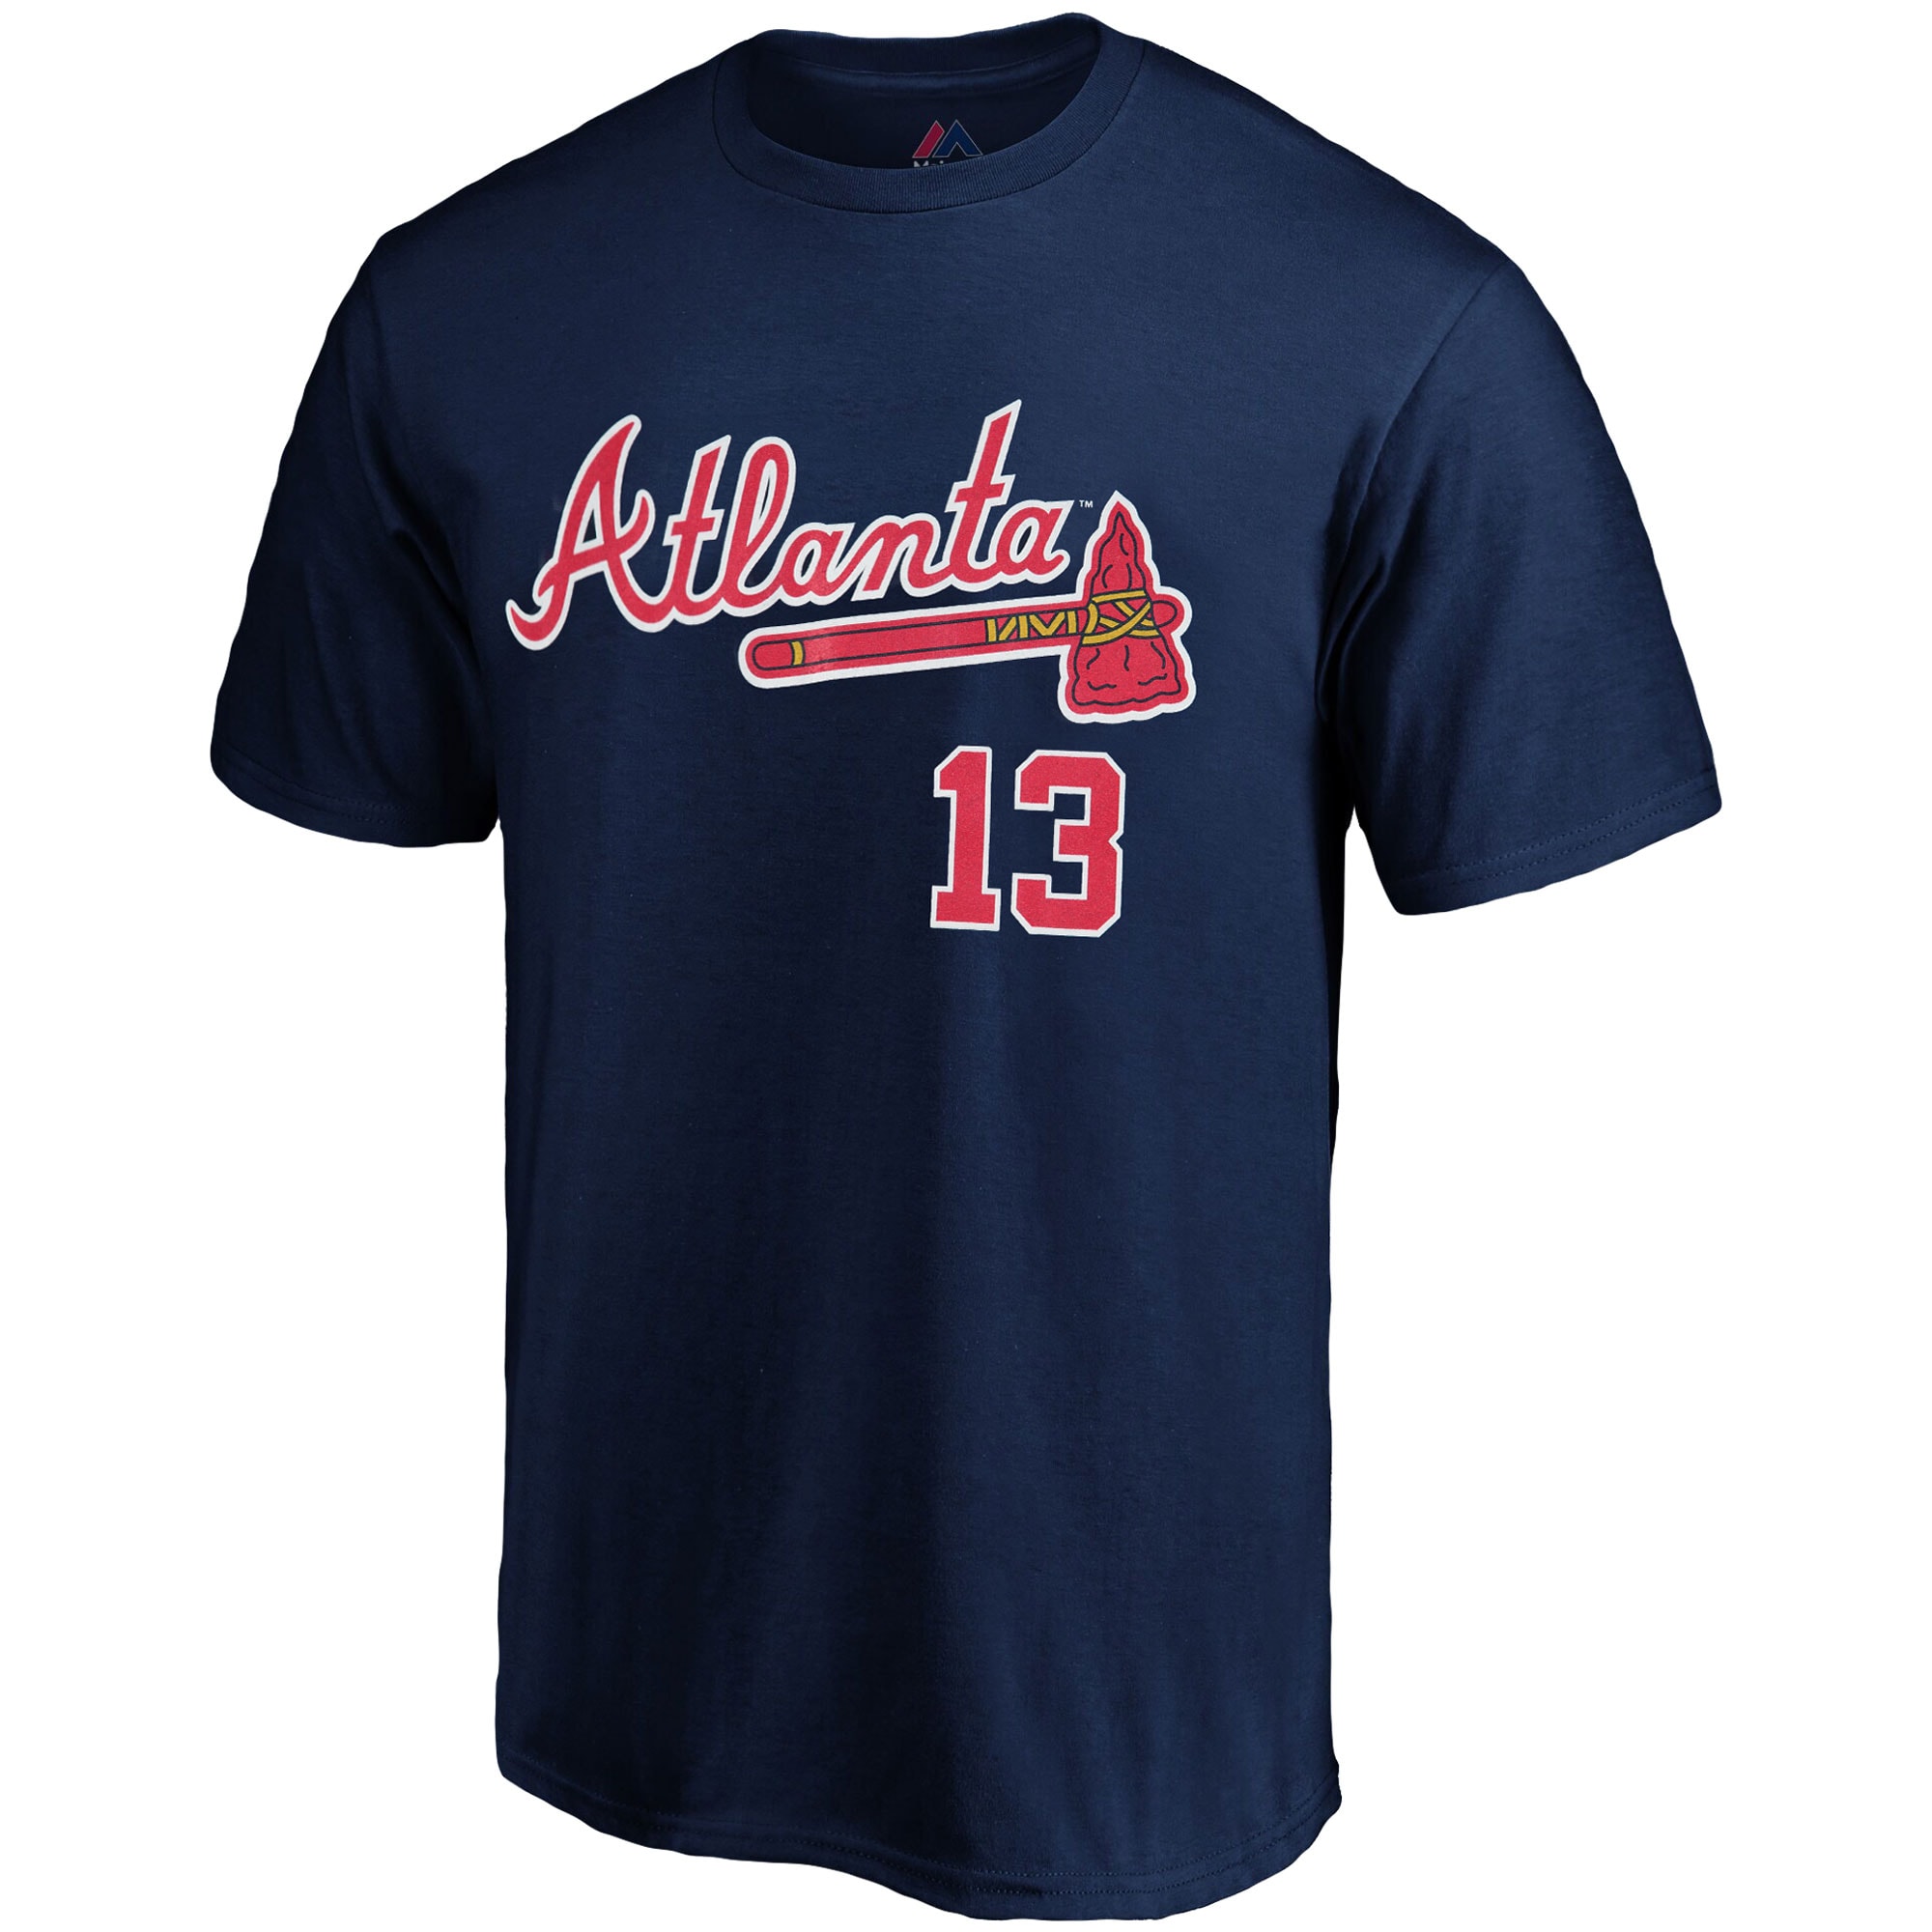 Atlanta Braves R Acuna Jr - MLB Player Men's Short Sleeve Crew Neck T-Shirt - image 2 of 3